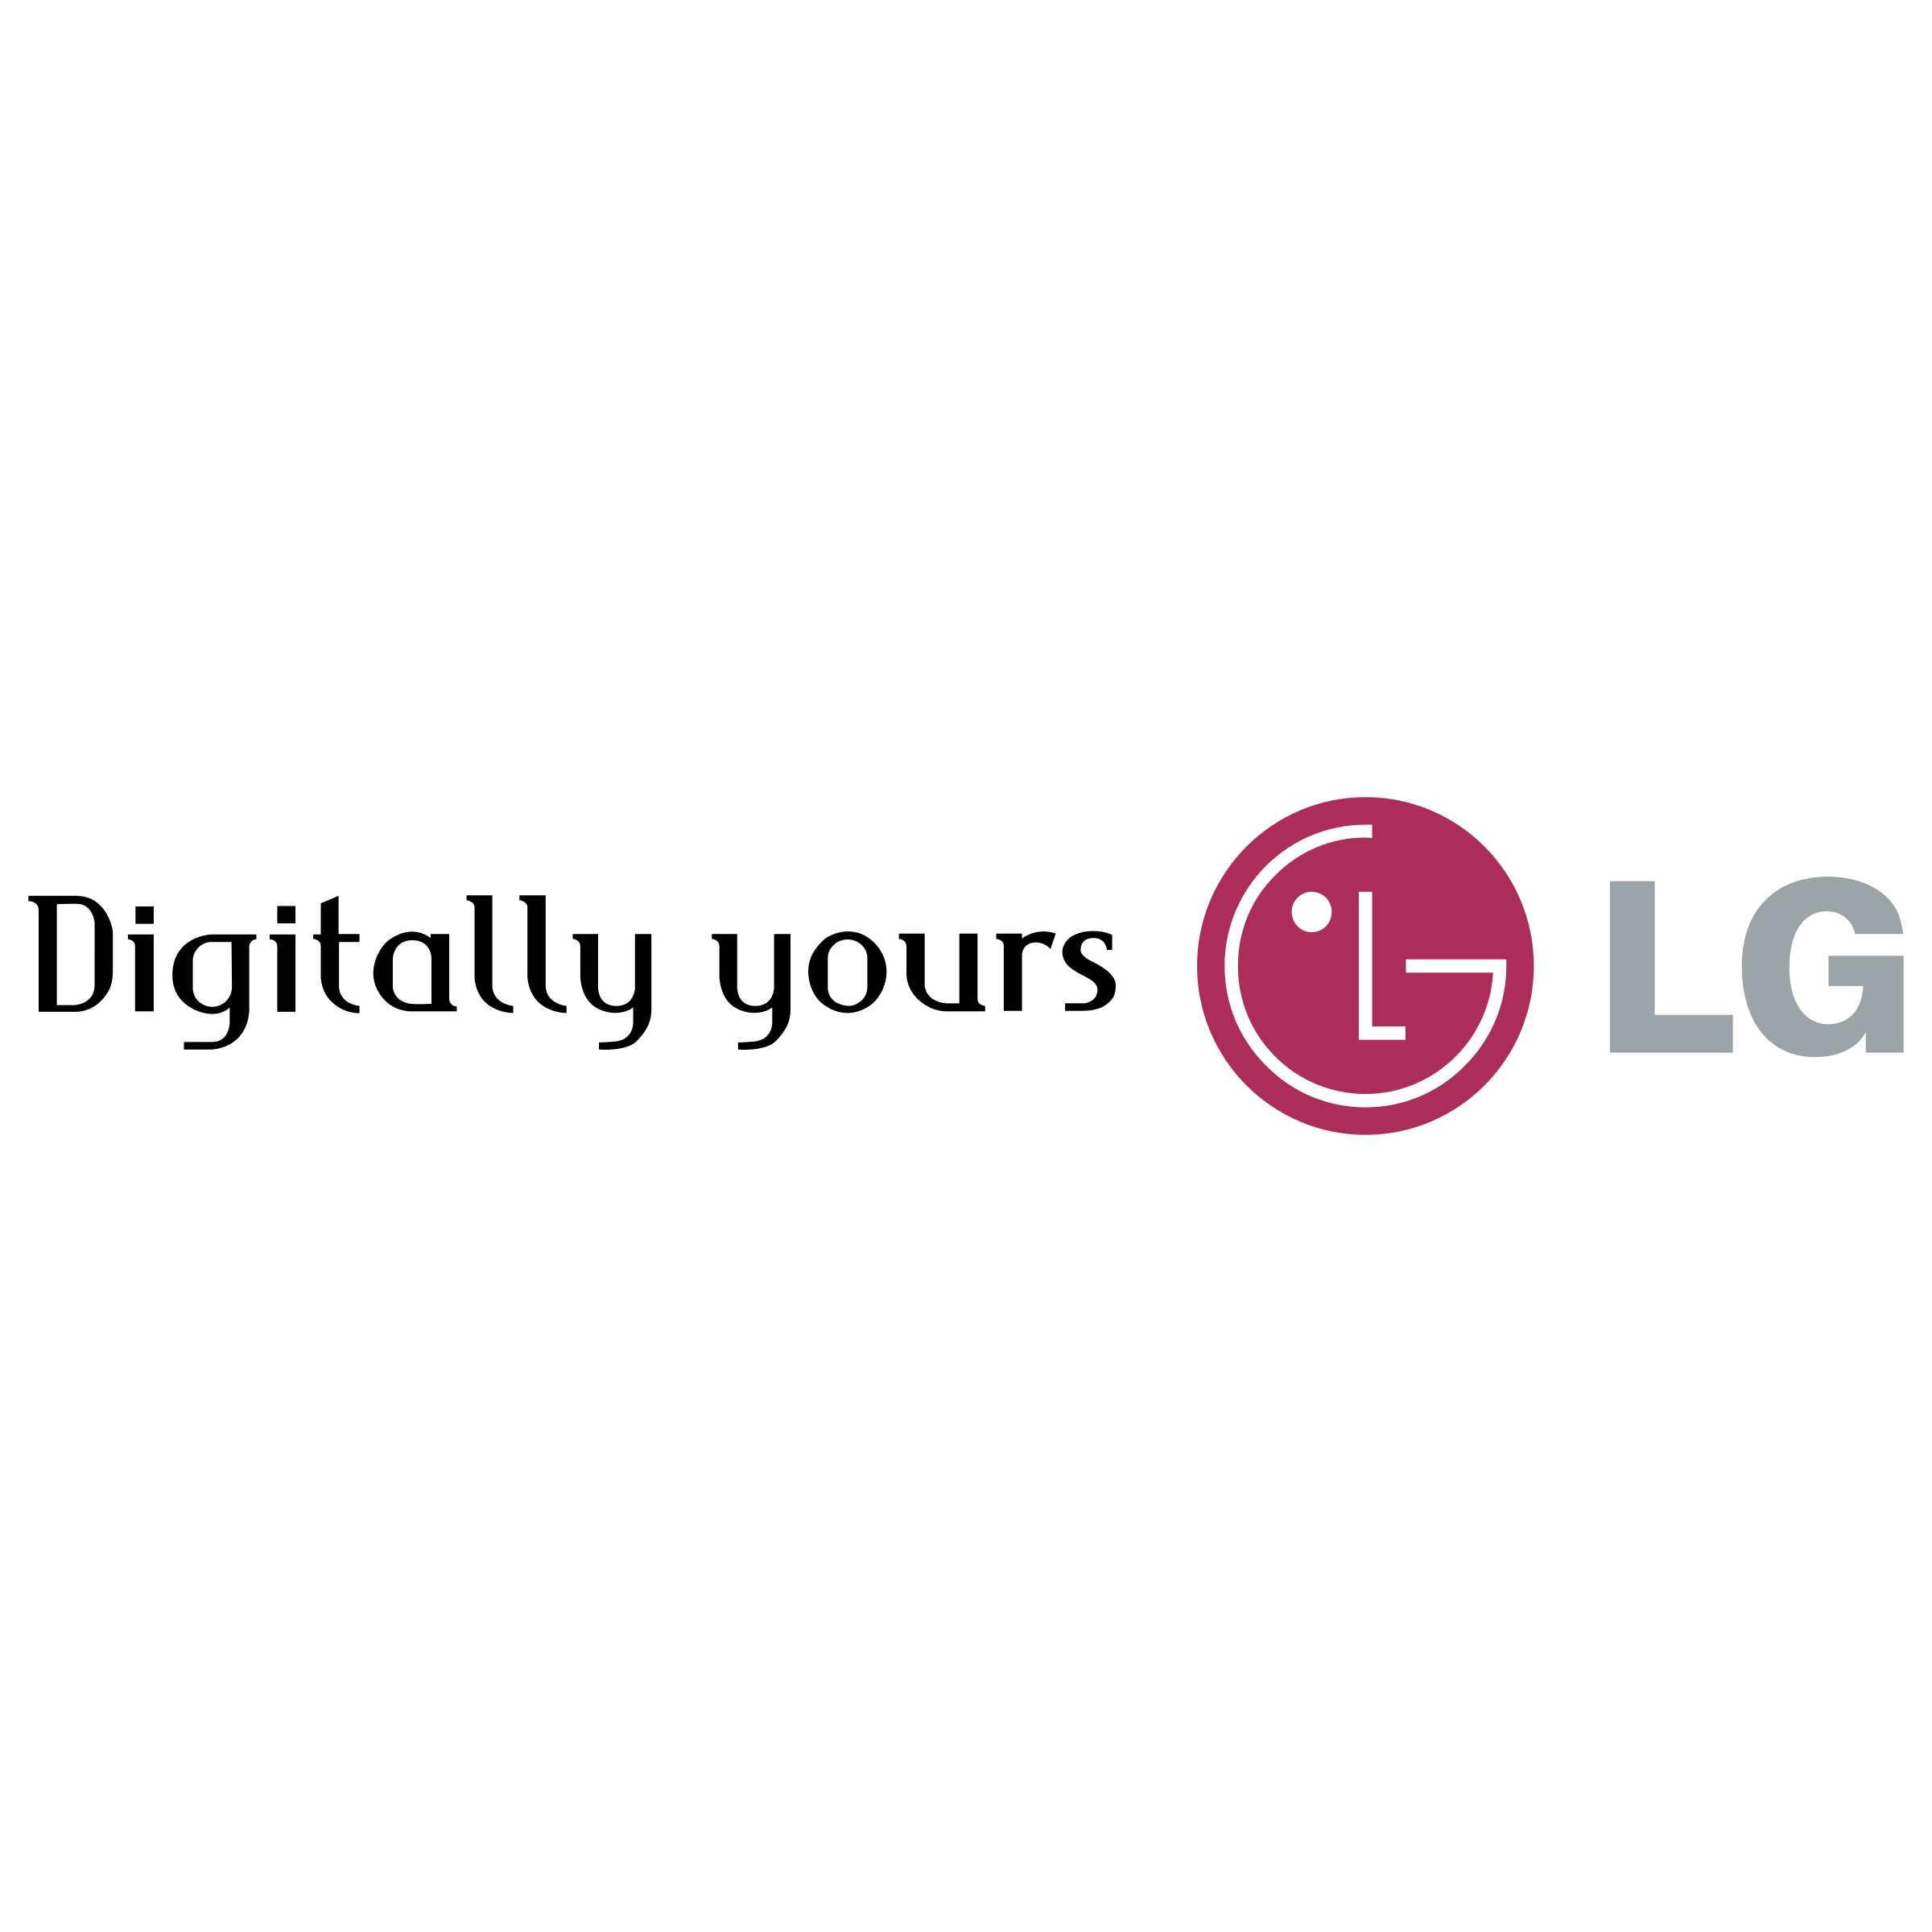 LG Logo PNG Isolated Image